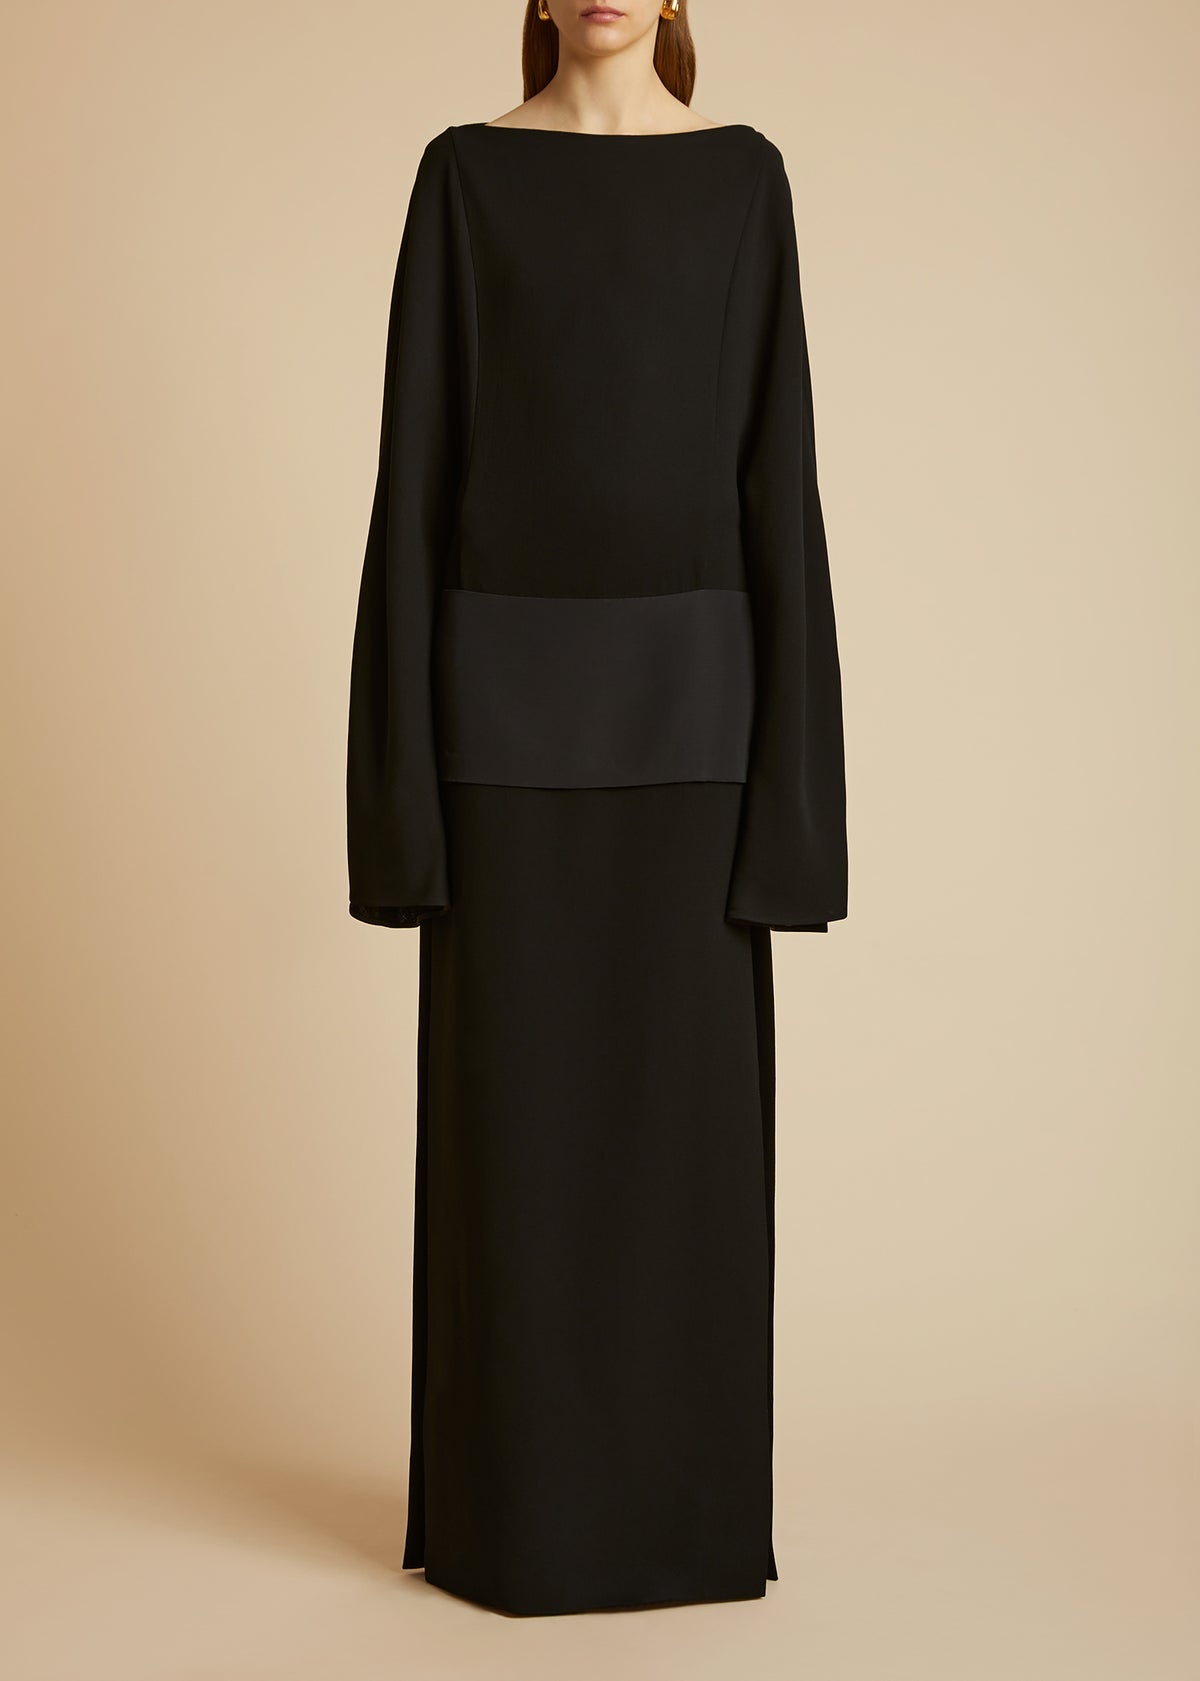 The Nanette Dress in Black - 2